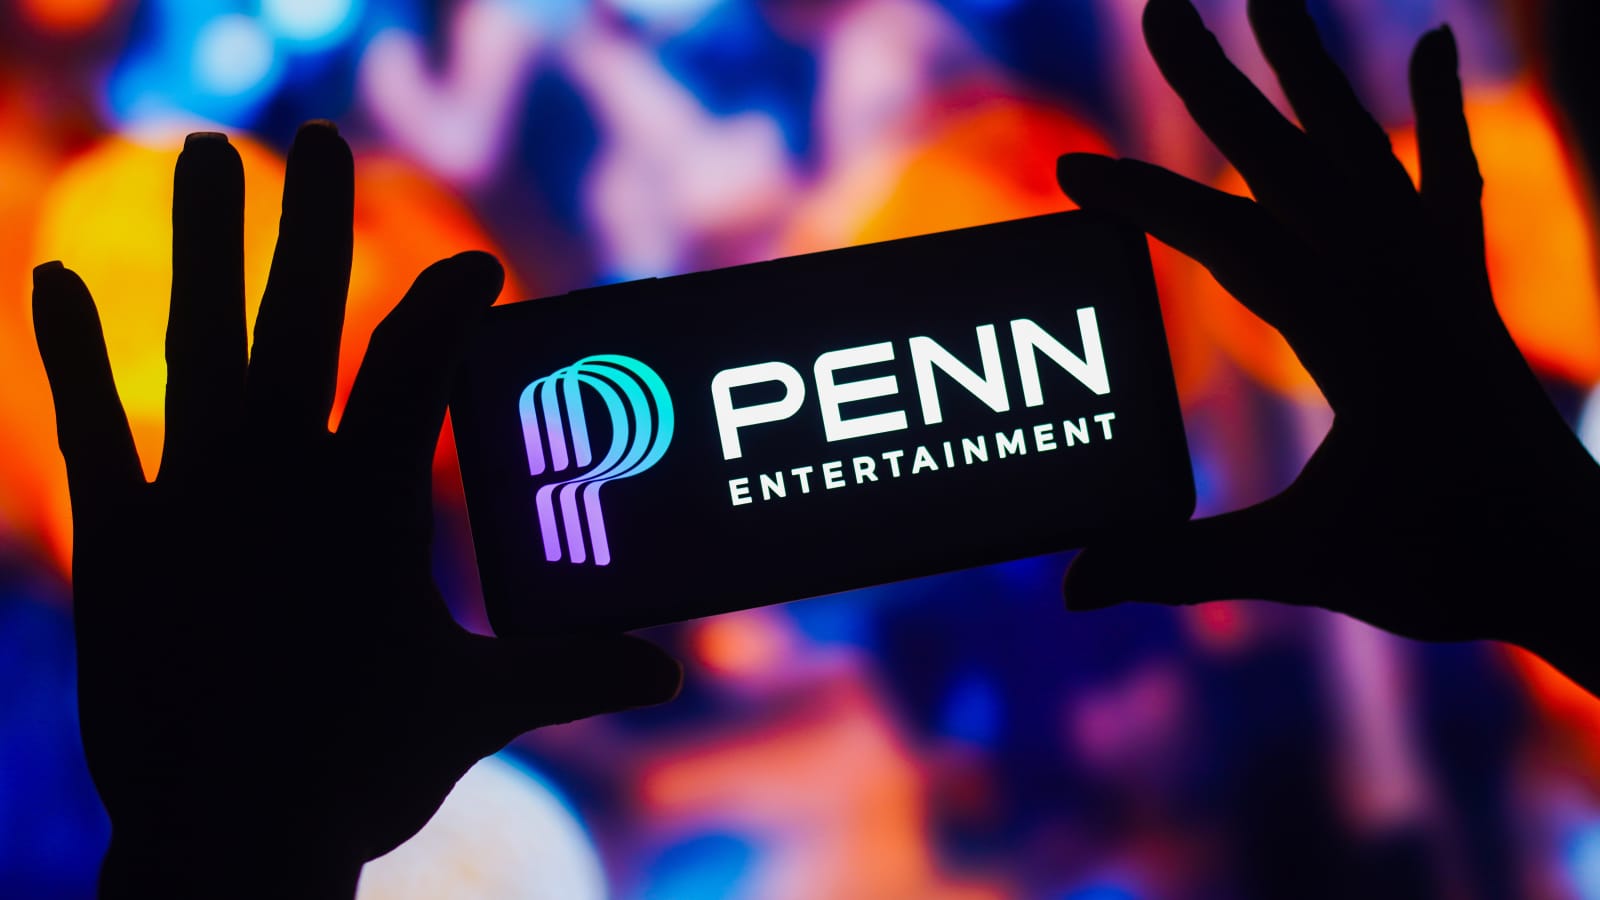 Penn Entertainment's Bold Move